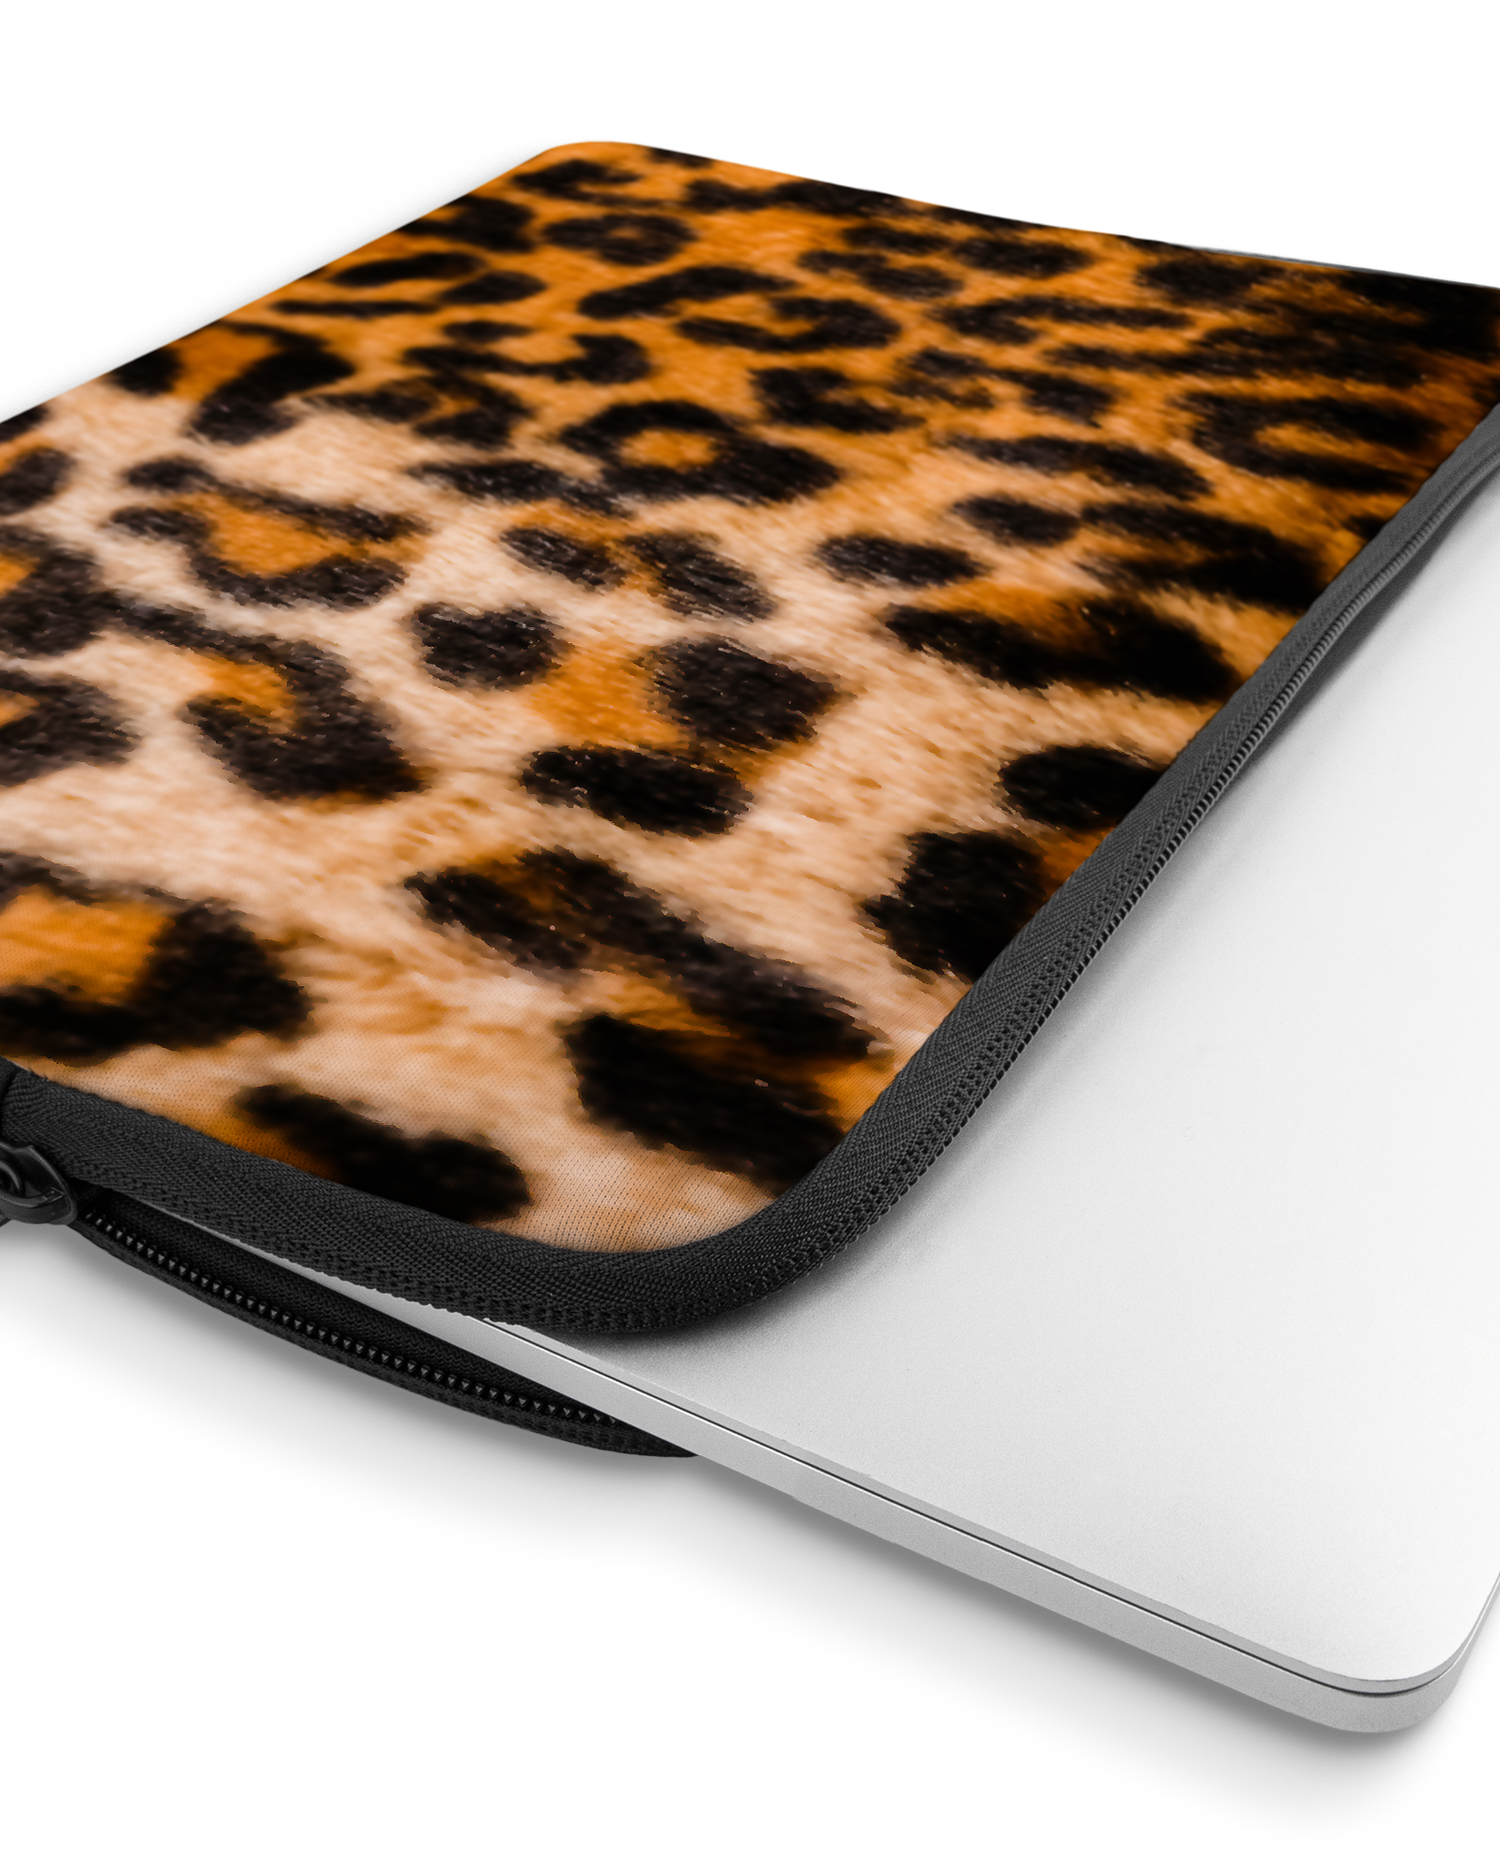 Leopard Pattern Laptophülle 13 Zoll mit Gerät im Inneren